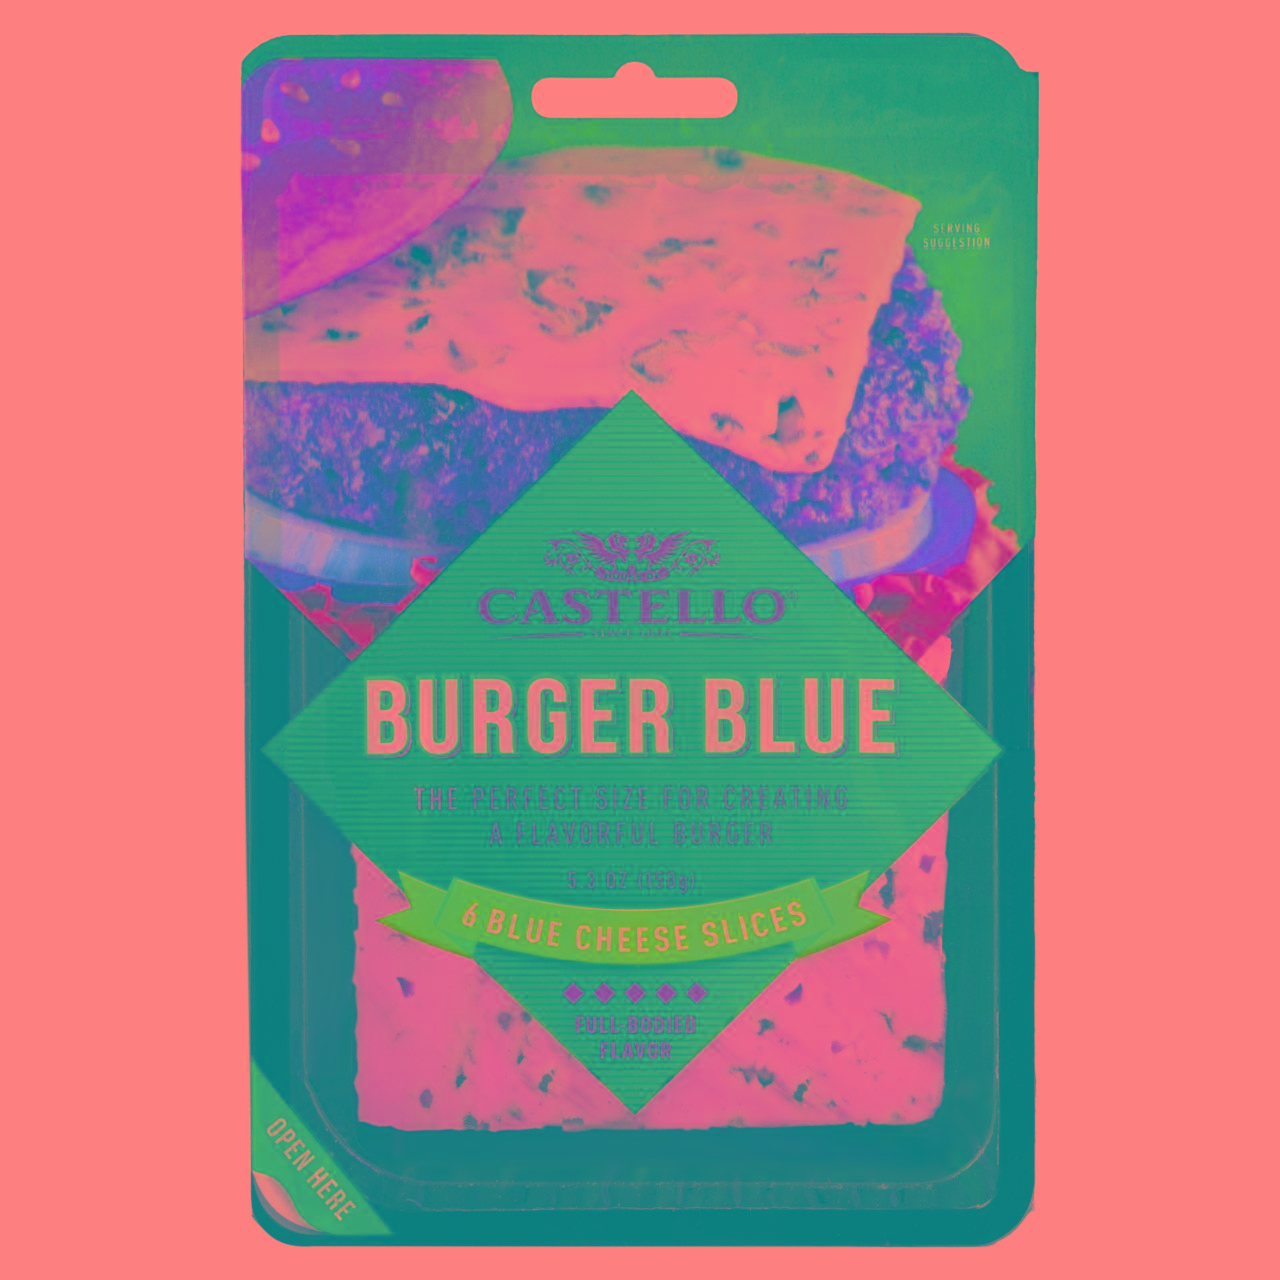 Zdjęcia - Castello Burger Blue Ser pleśniowy 150 g